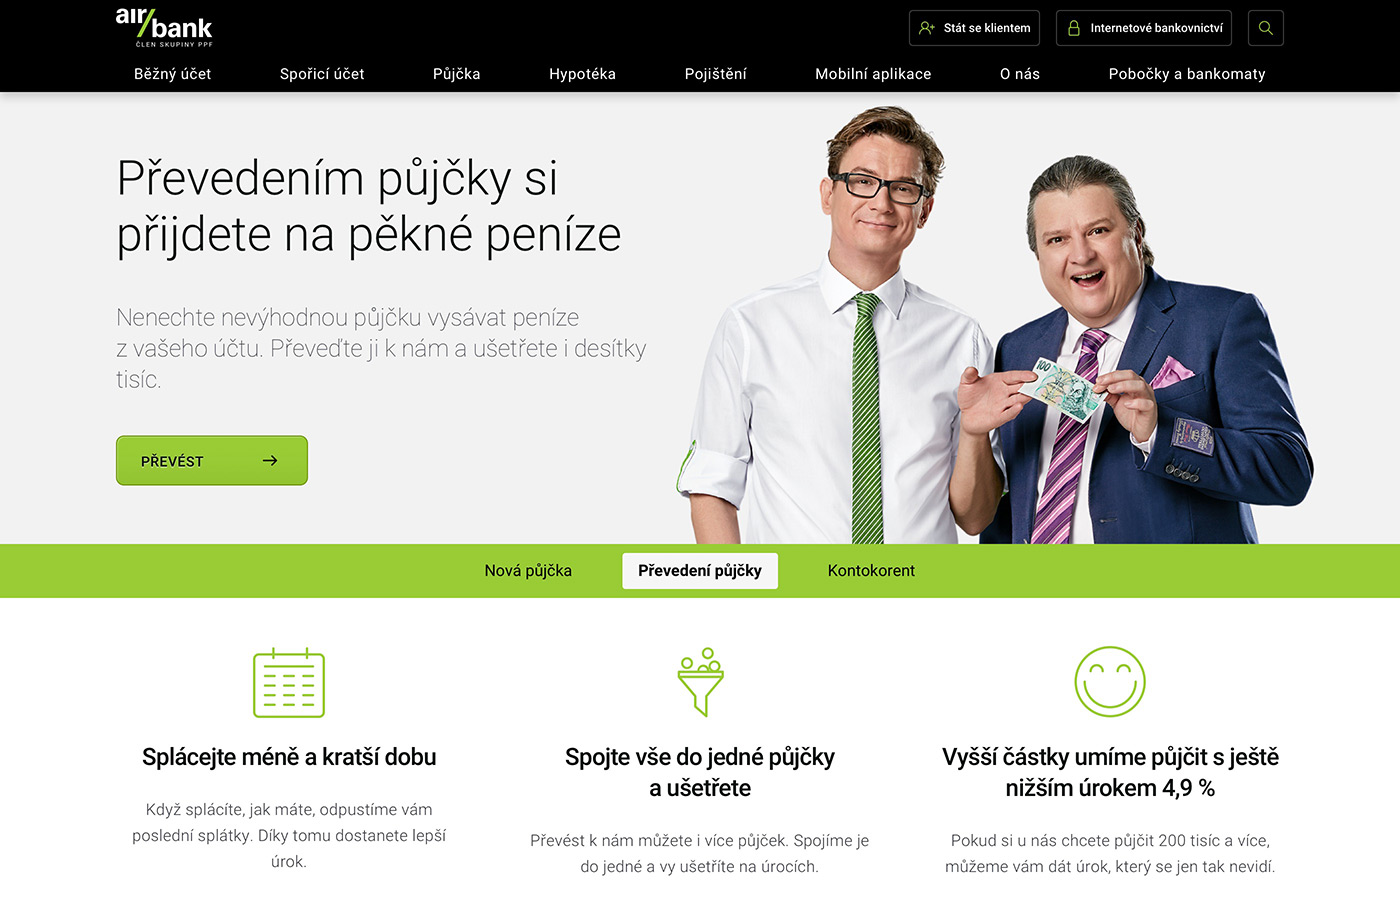 Webové stránky https://www.airbank.cz/produkty/prevedeni-pujcky/